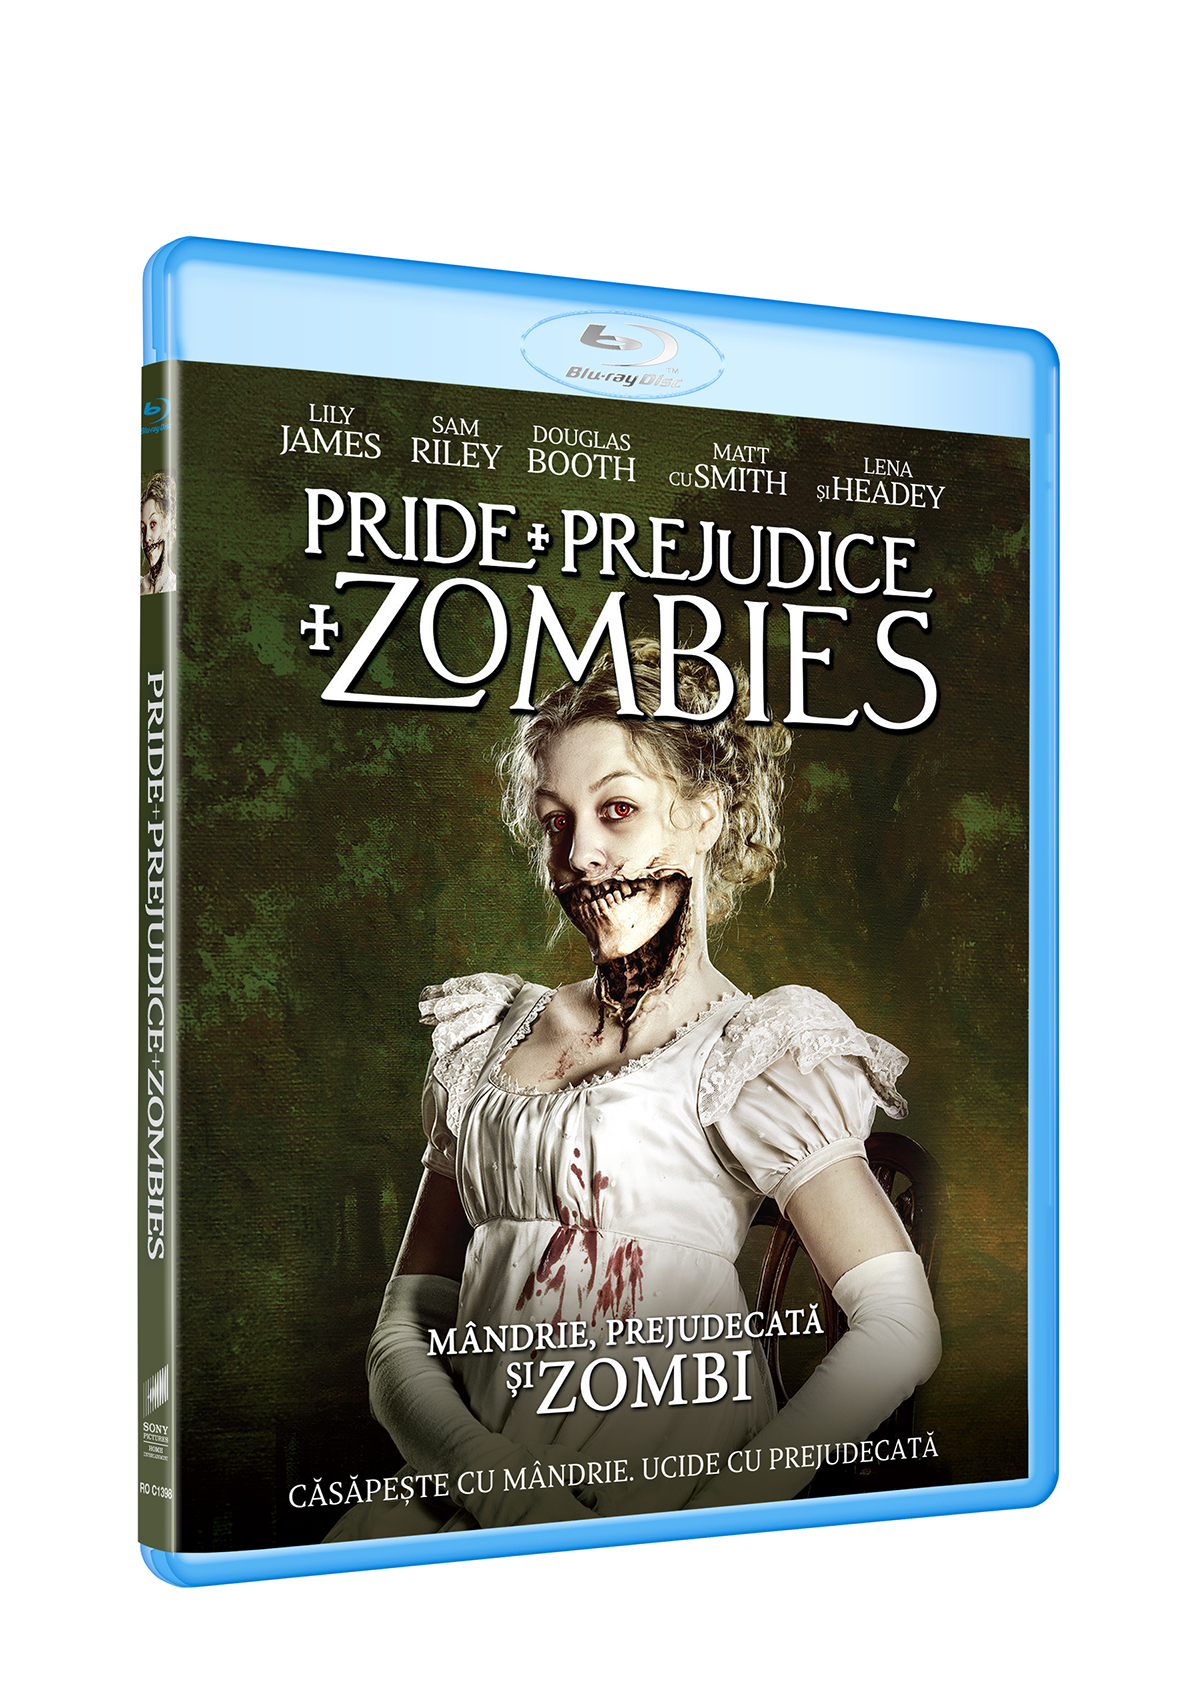 Mandrie, Prejudecata si zombi (Blu Ray Disc) / Pride and Prejudice and Zombies